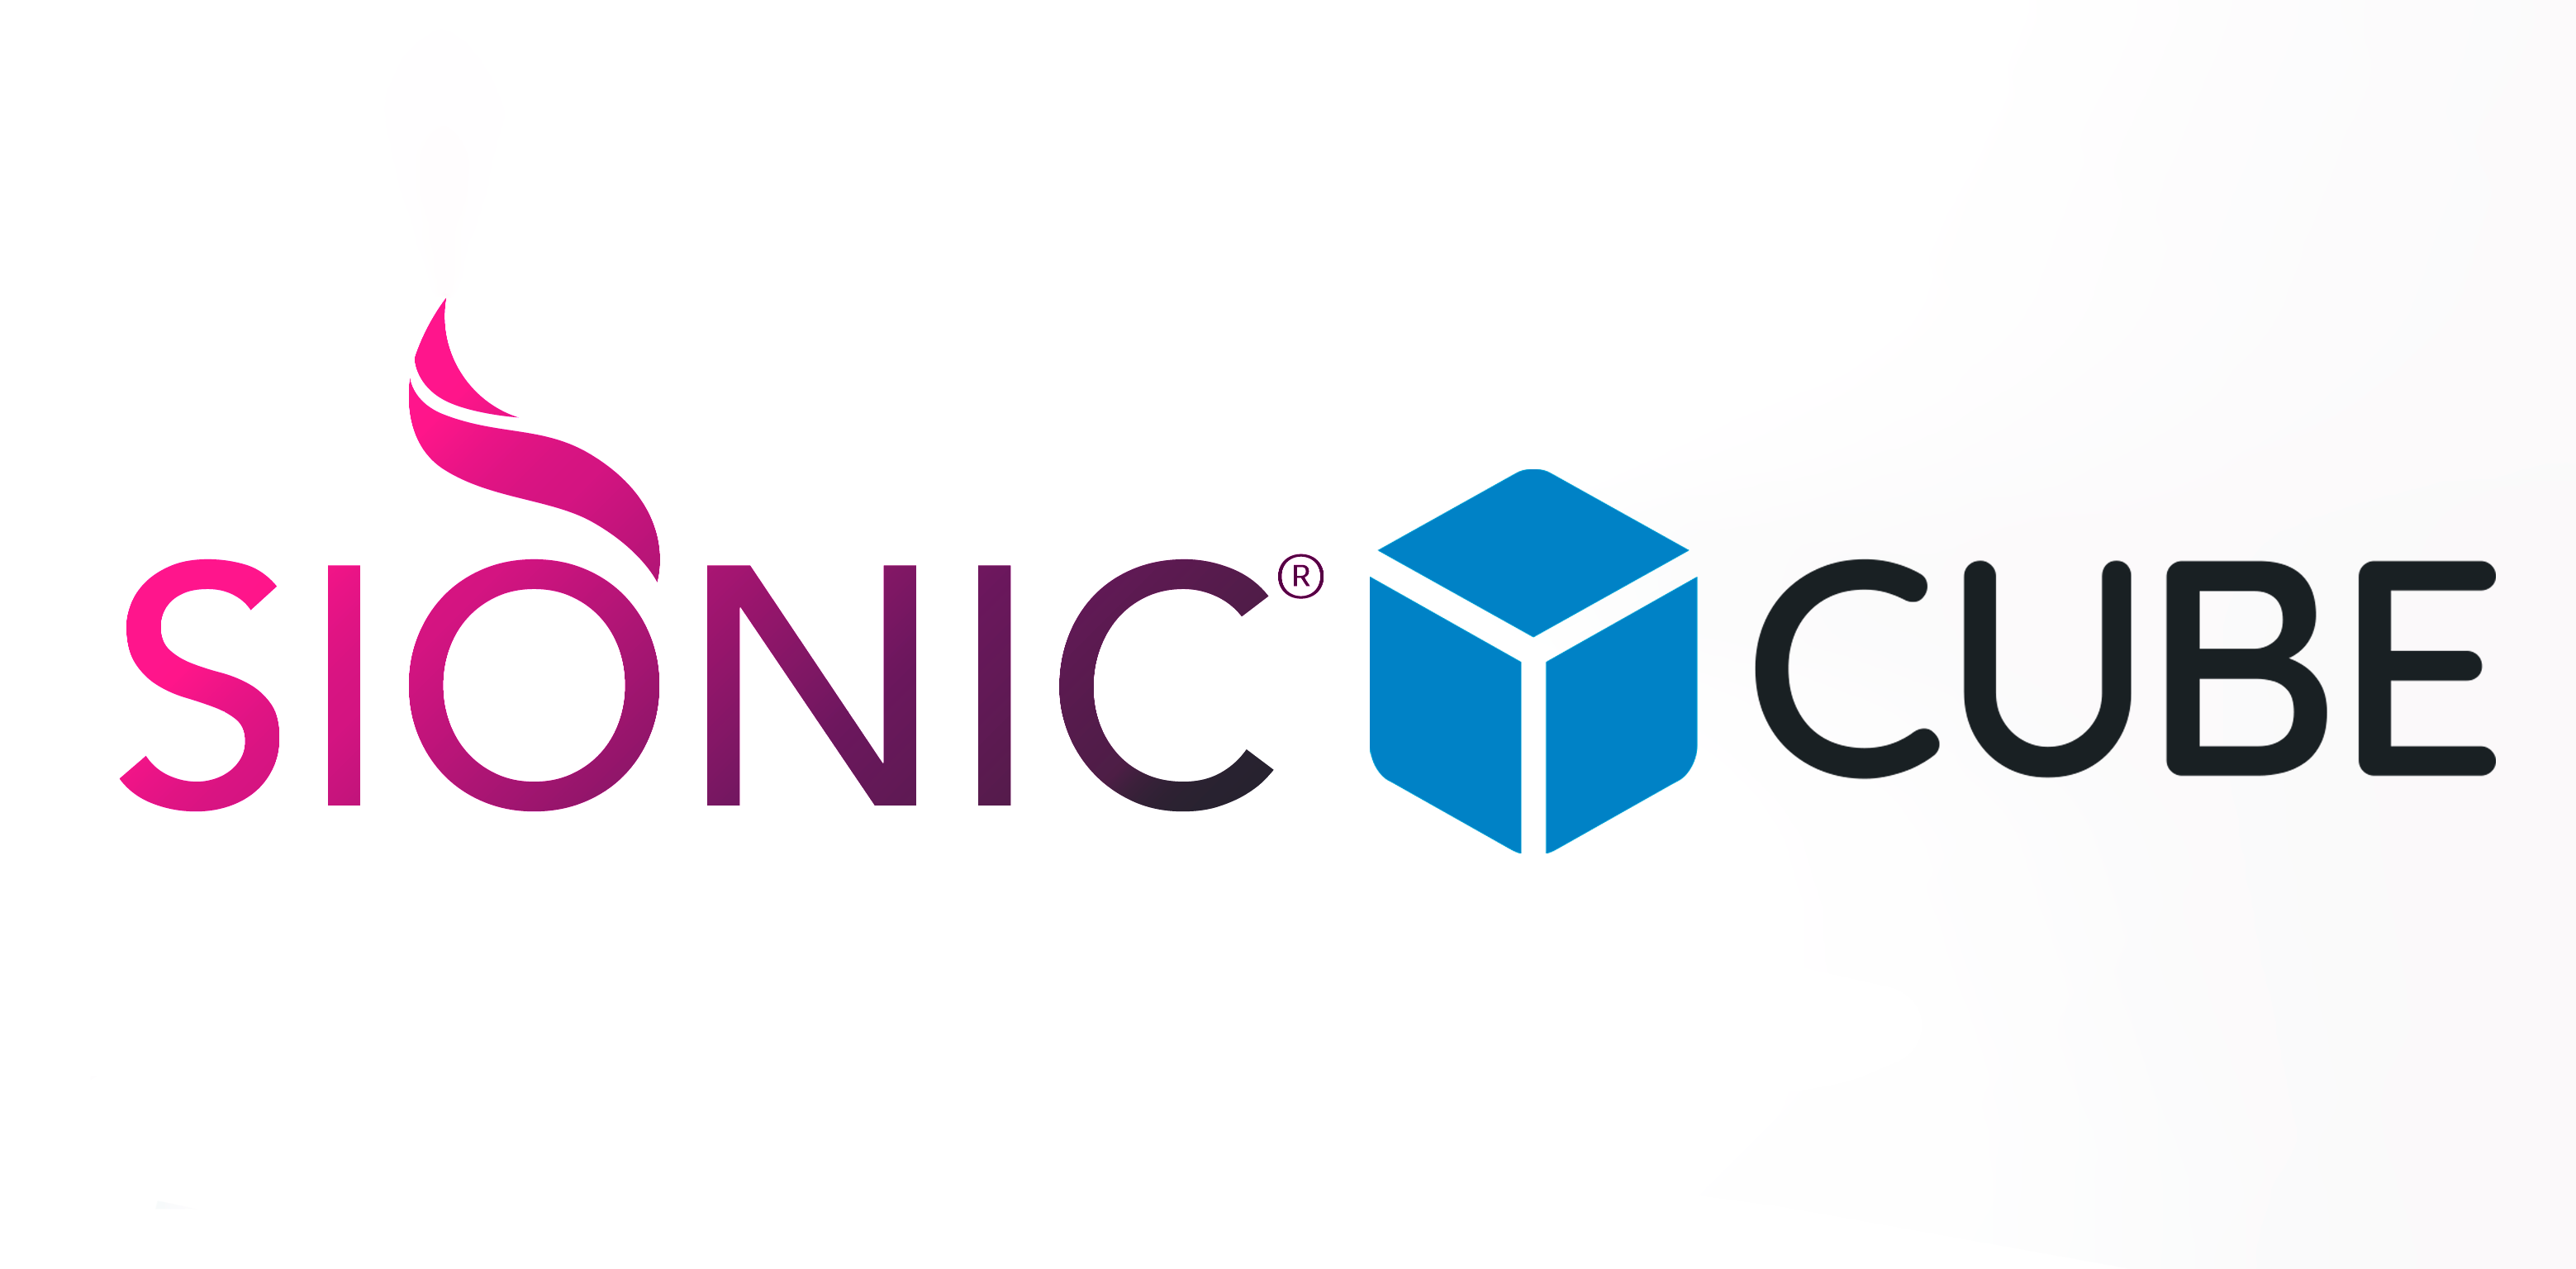 CUBE Partners with Sionic to Turn Regulatory Data into Regulatory Intelligence